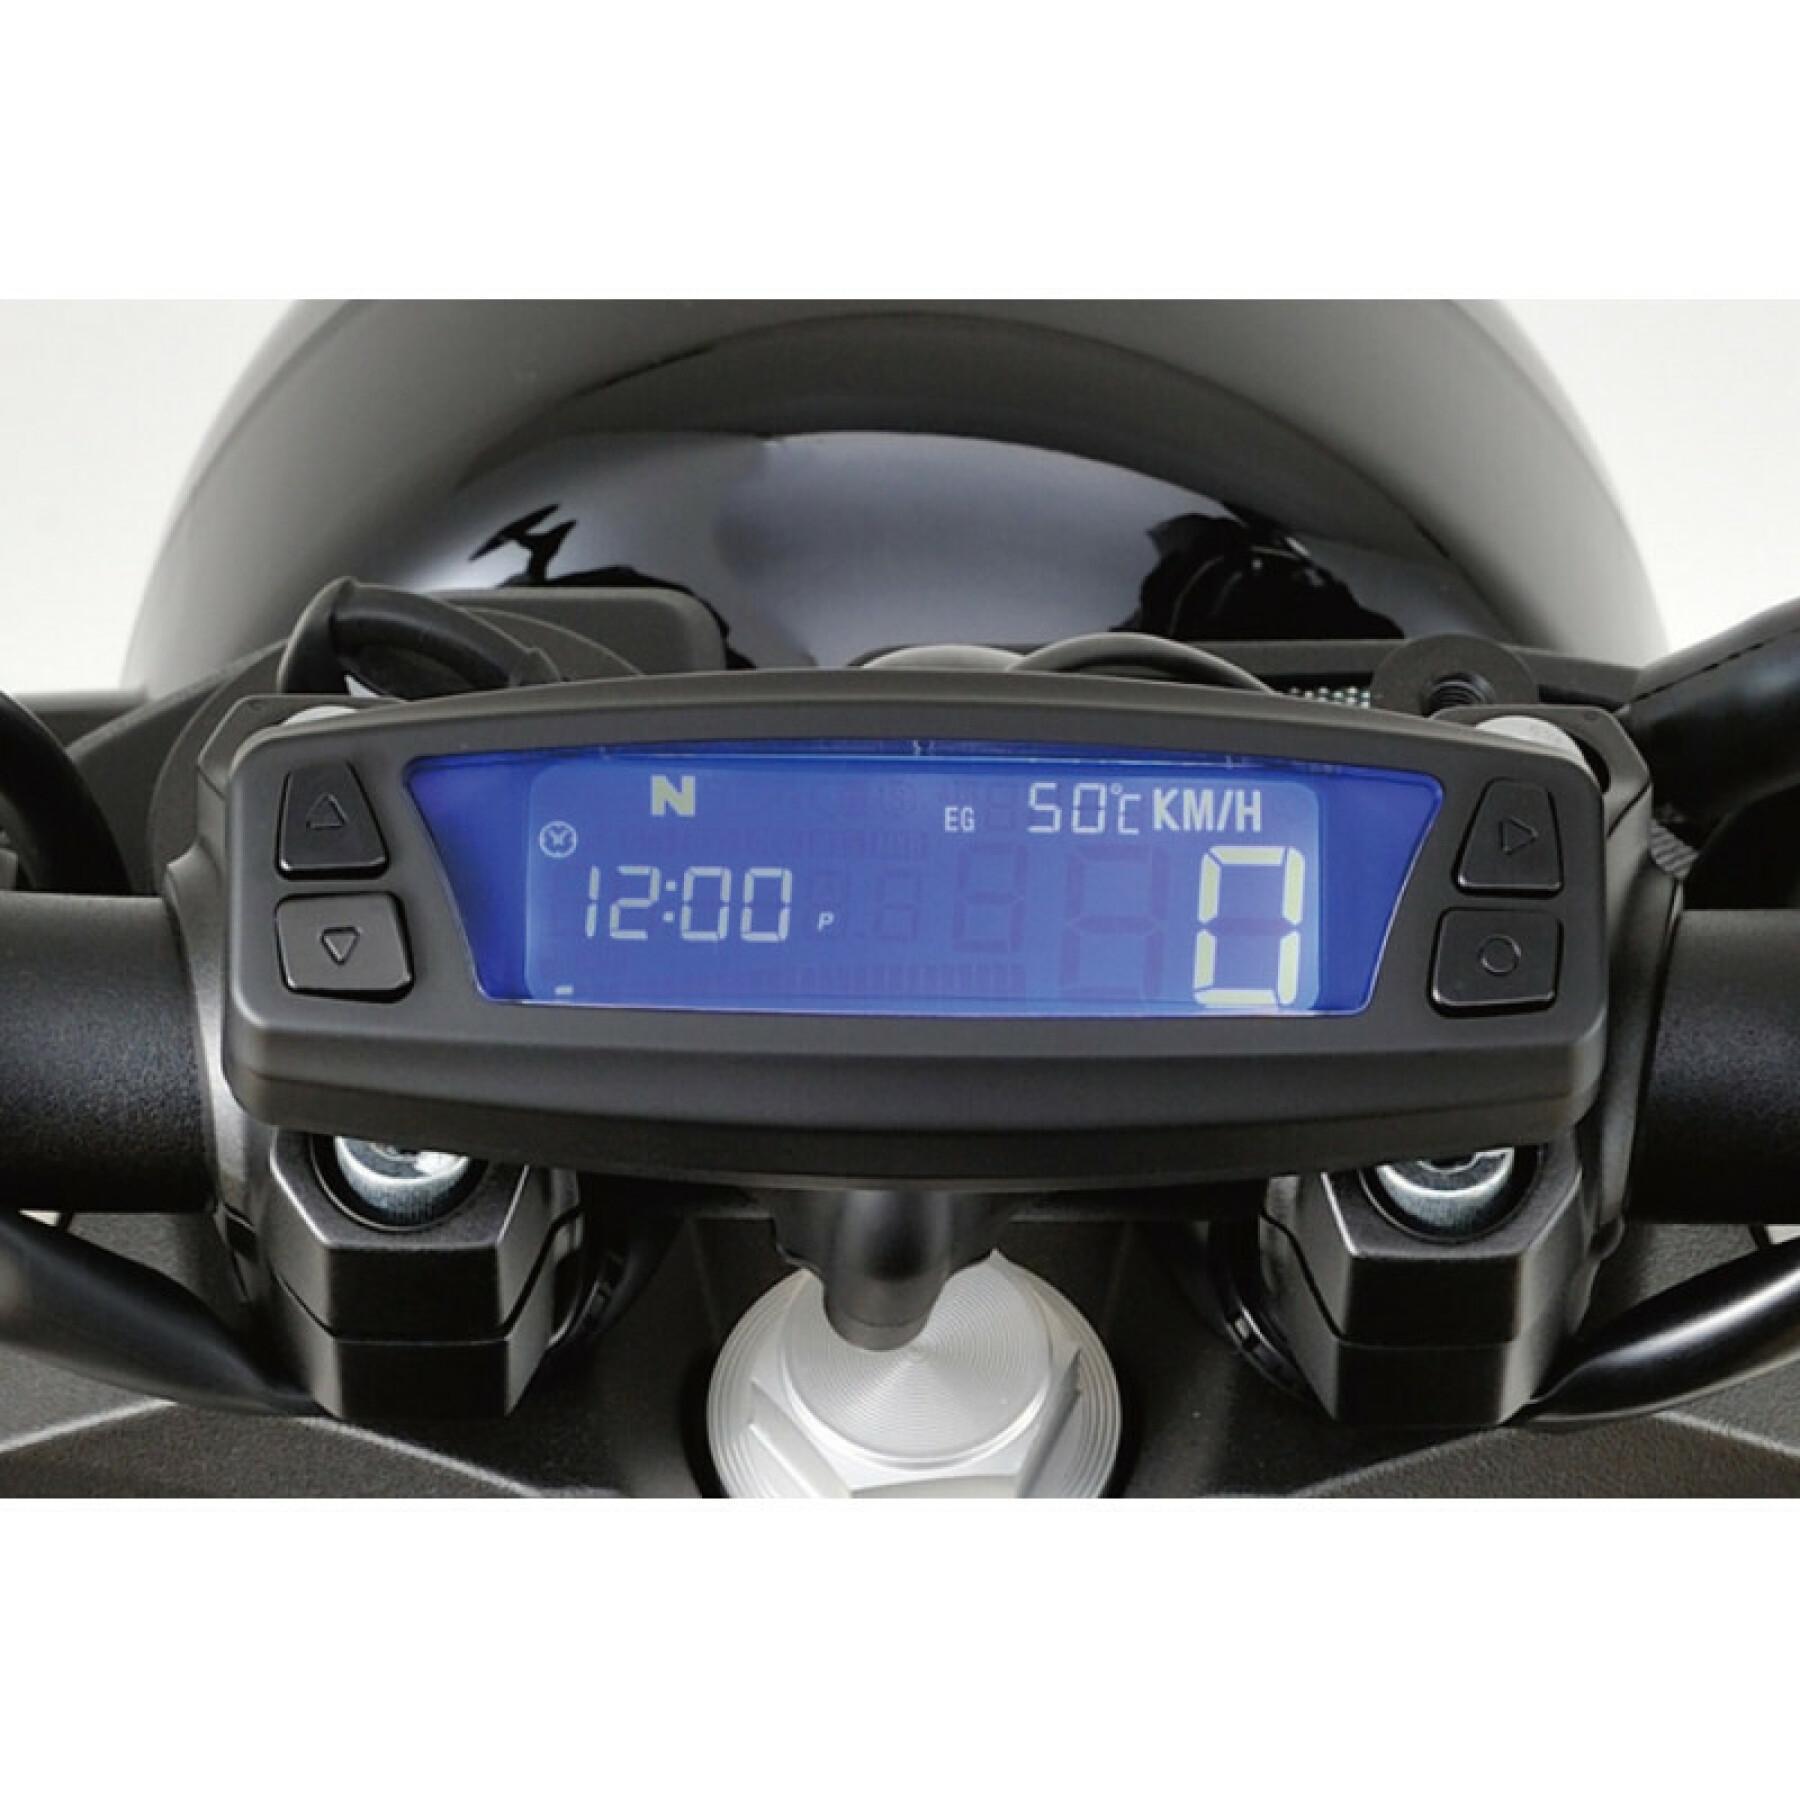 Digital motorcycle meter Daytona Asura